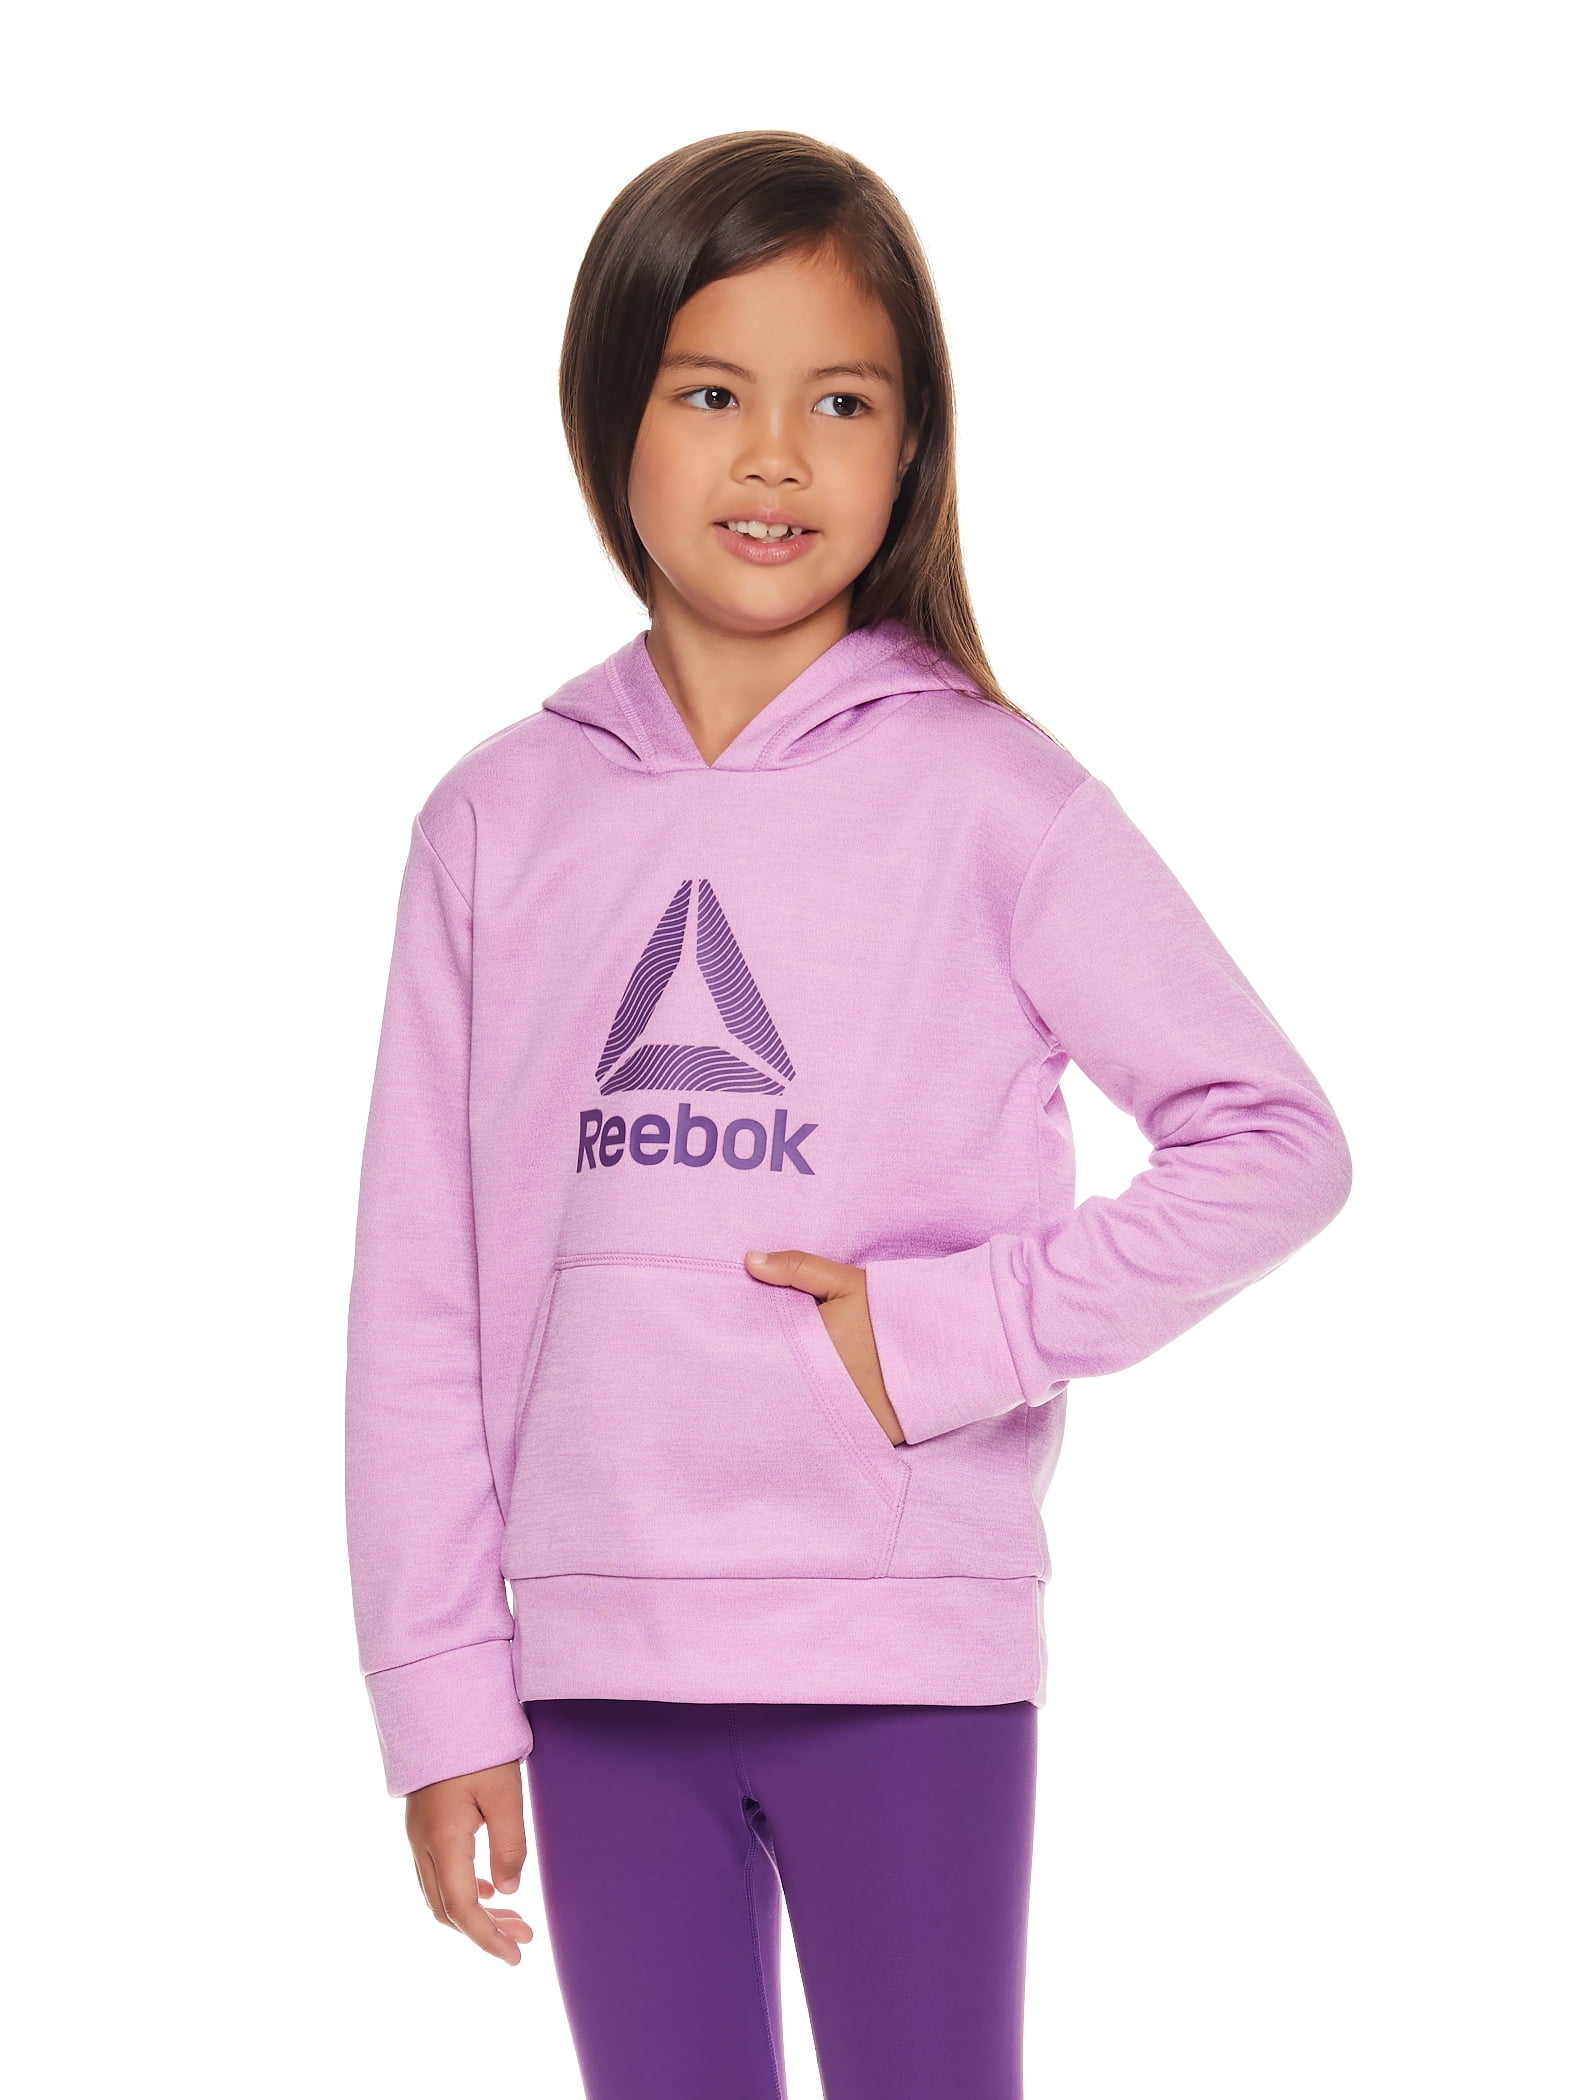 Reebok Girl's Prestige Performance Fleece Hoodie, Sizes 4-18 - Walmart.com